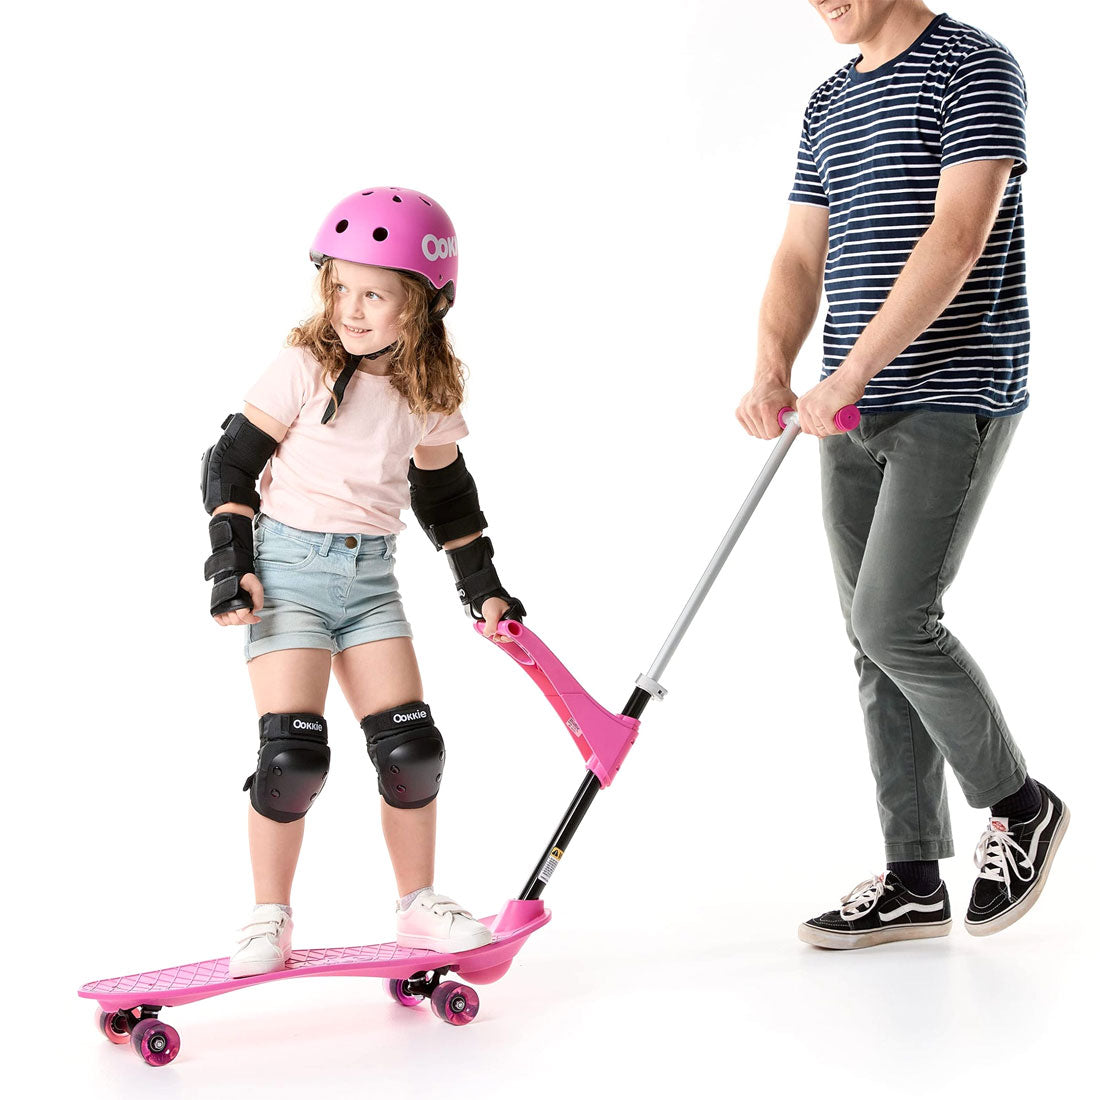 Ookkie Learner Skateboard - Pink Skateboard Completes Junior